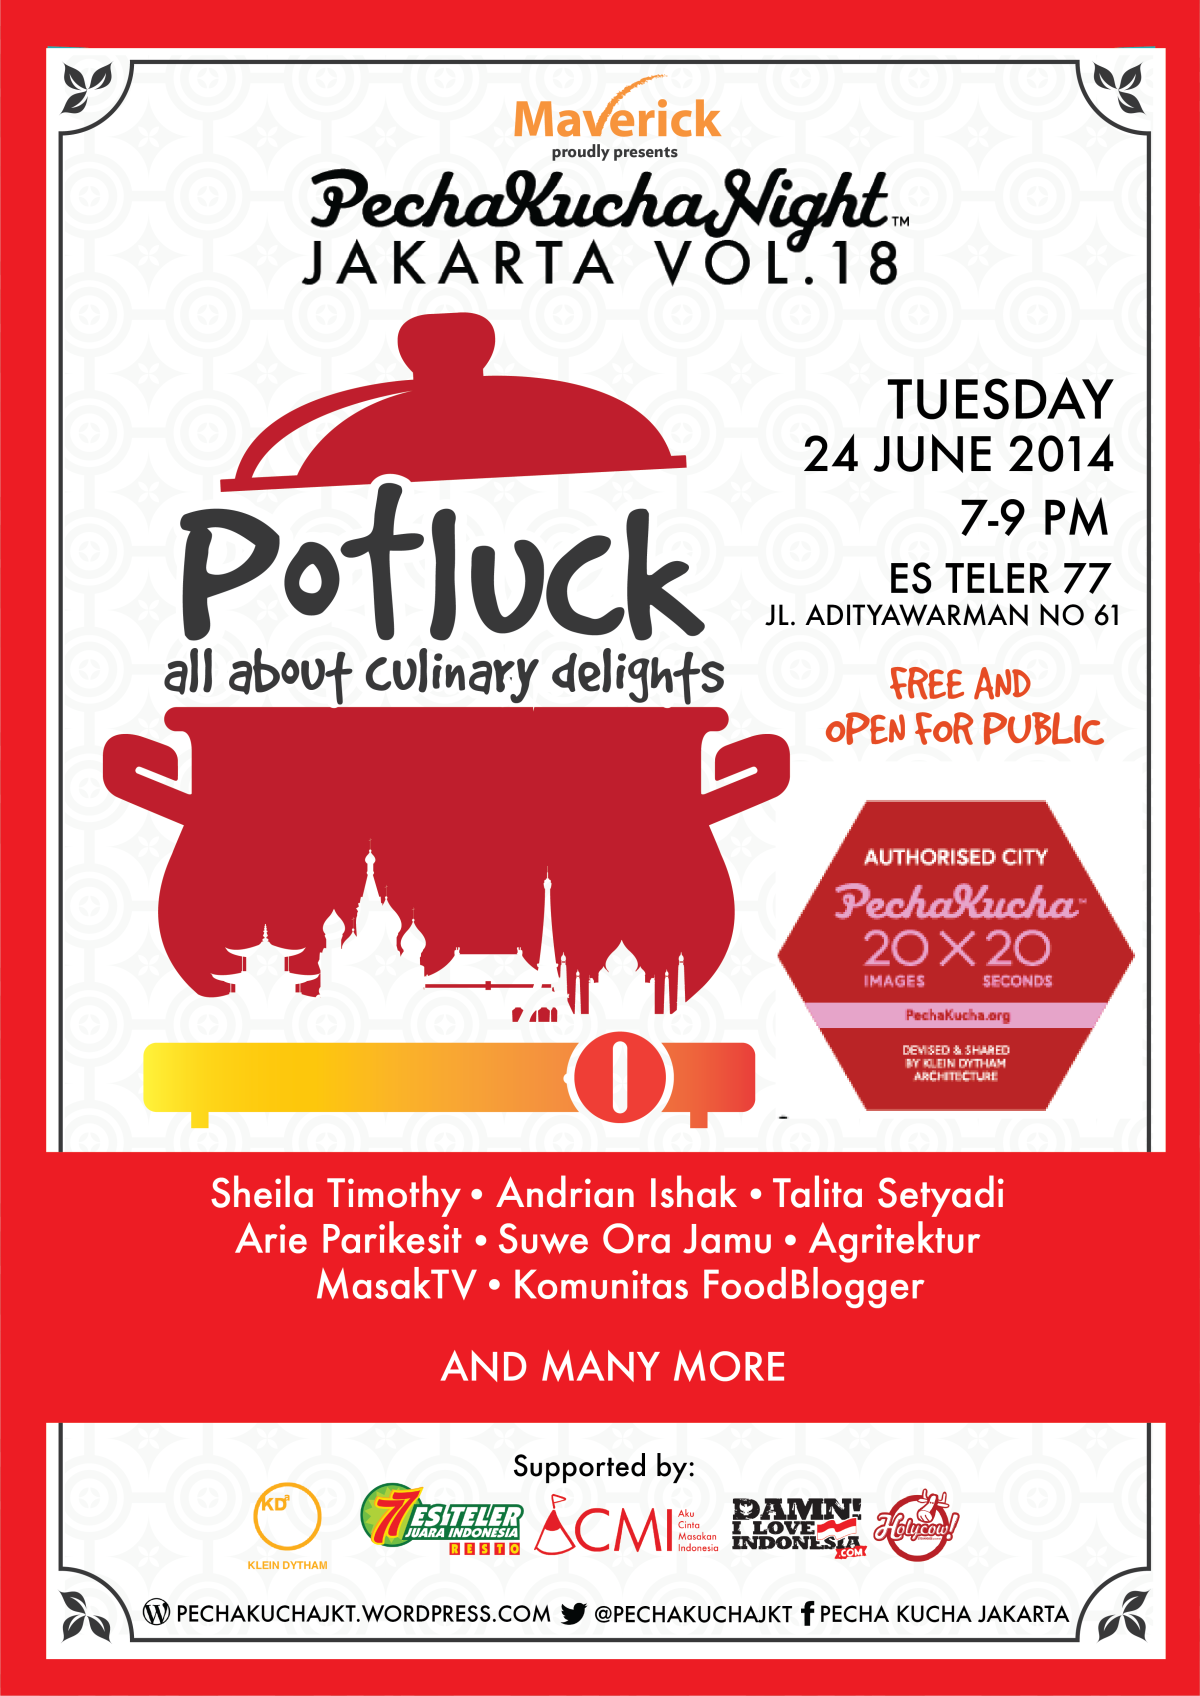 Ragam Rasa di Pecha Kucha Night Jakarta Vol.18 POTLUCK: All About Culinary Delights